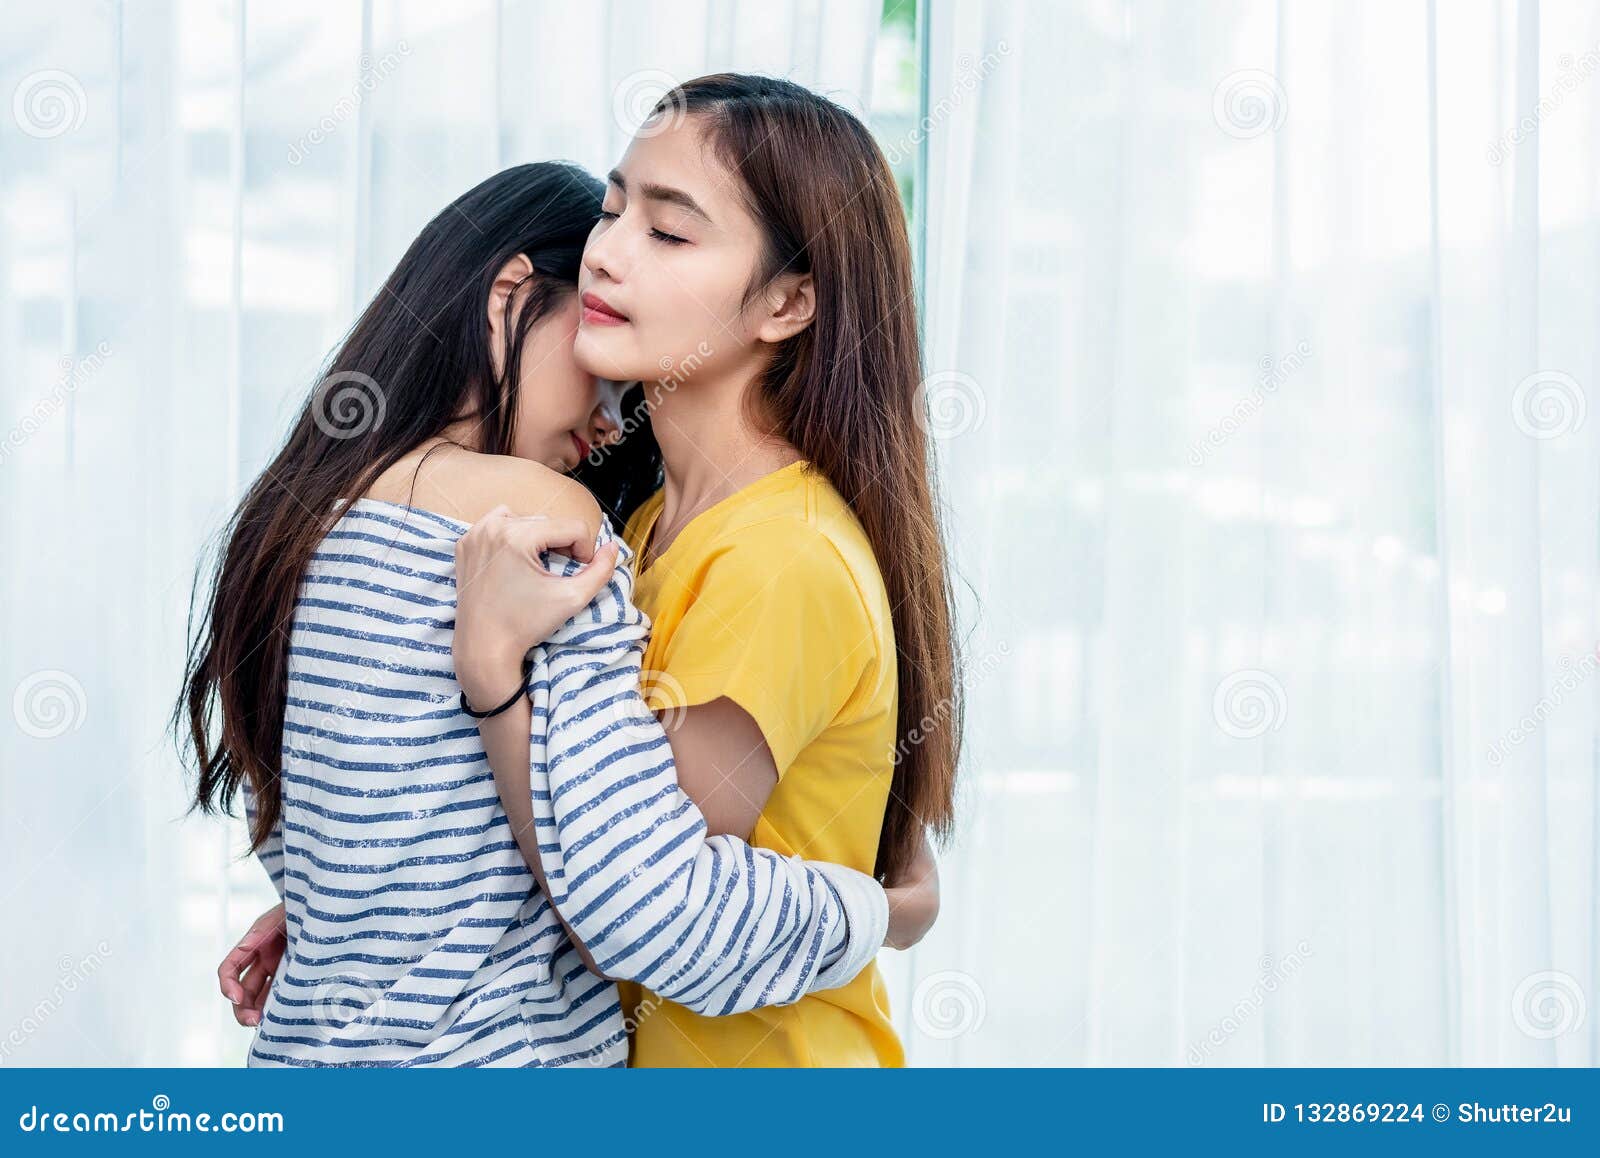 amber thornburg share sexy lesbian asian girls photos